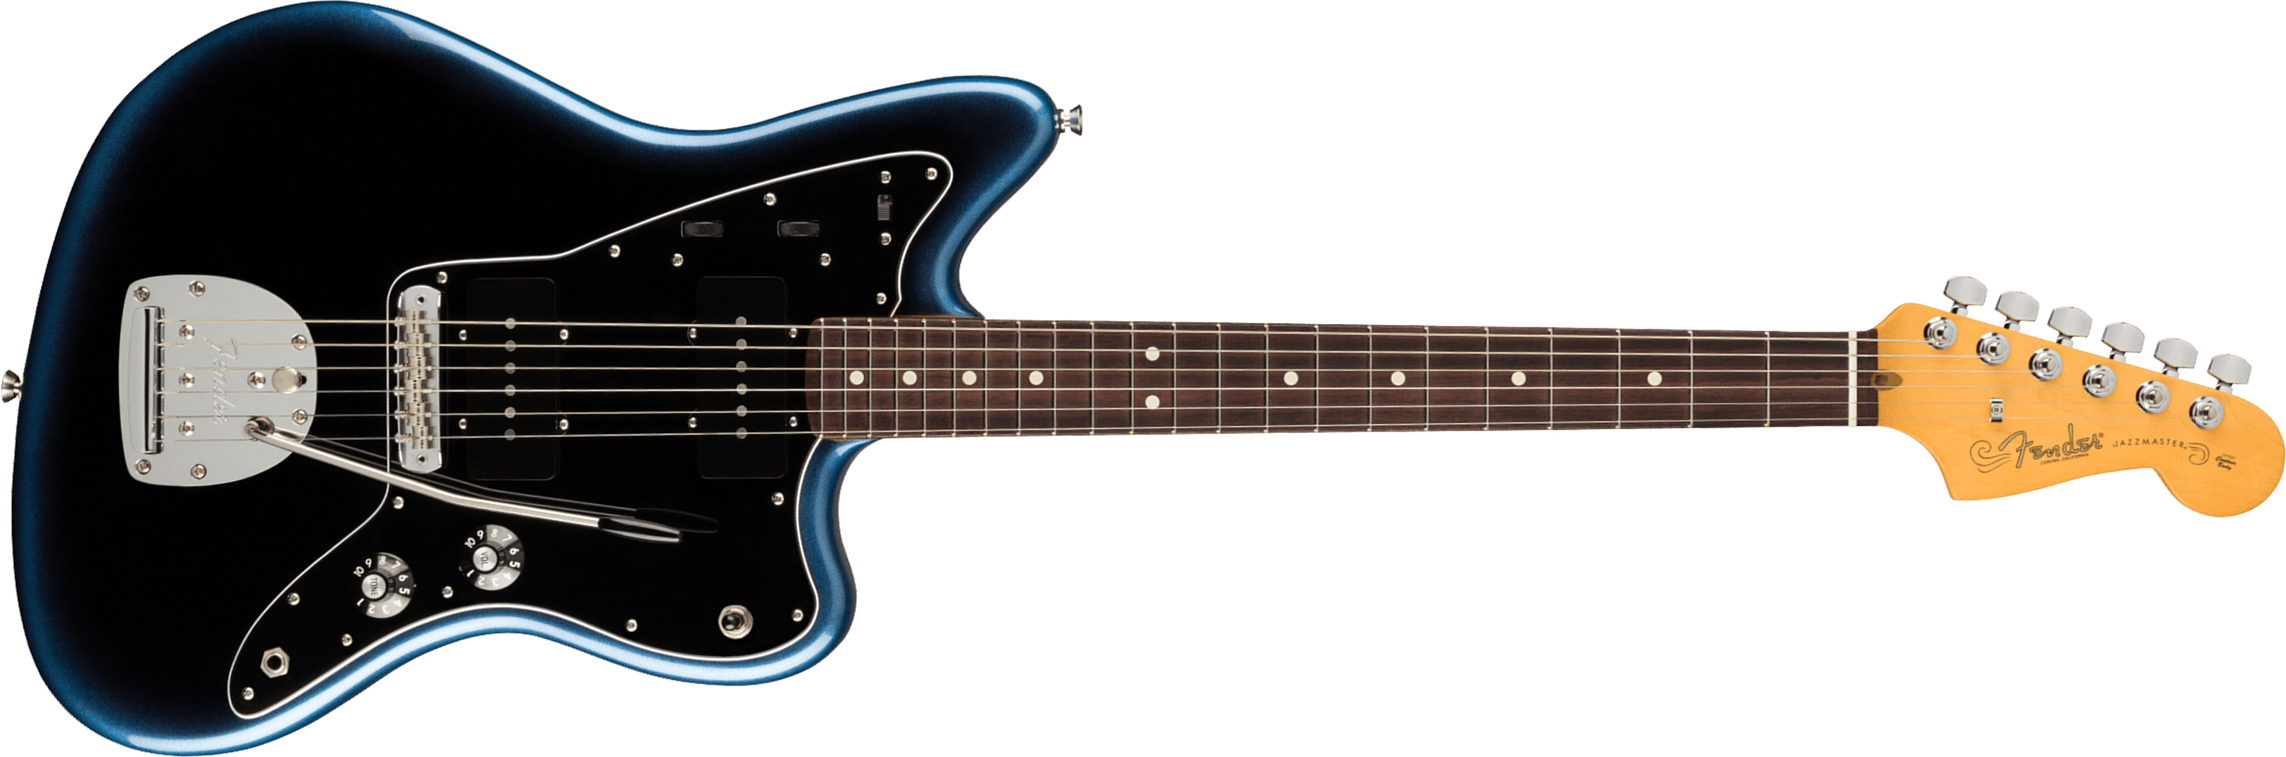 Fender Jazzmaster American Professional Ii Usa Rw - Dark Night - Retro rock electric guitar - Main picture